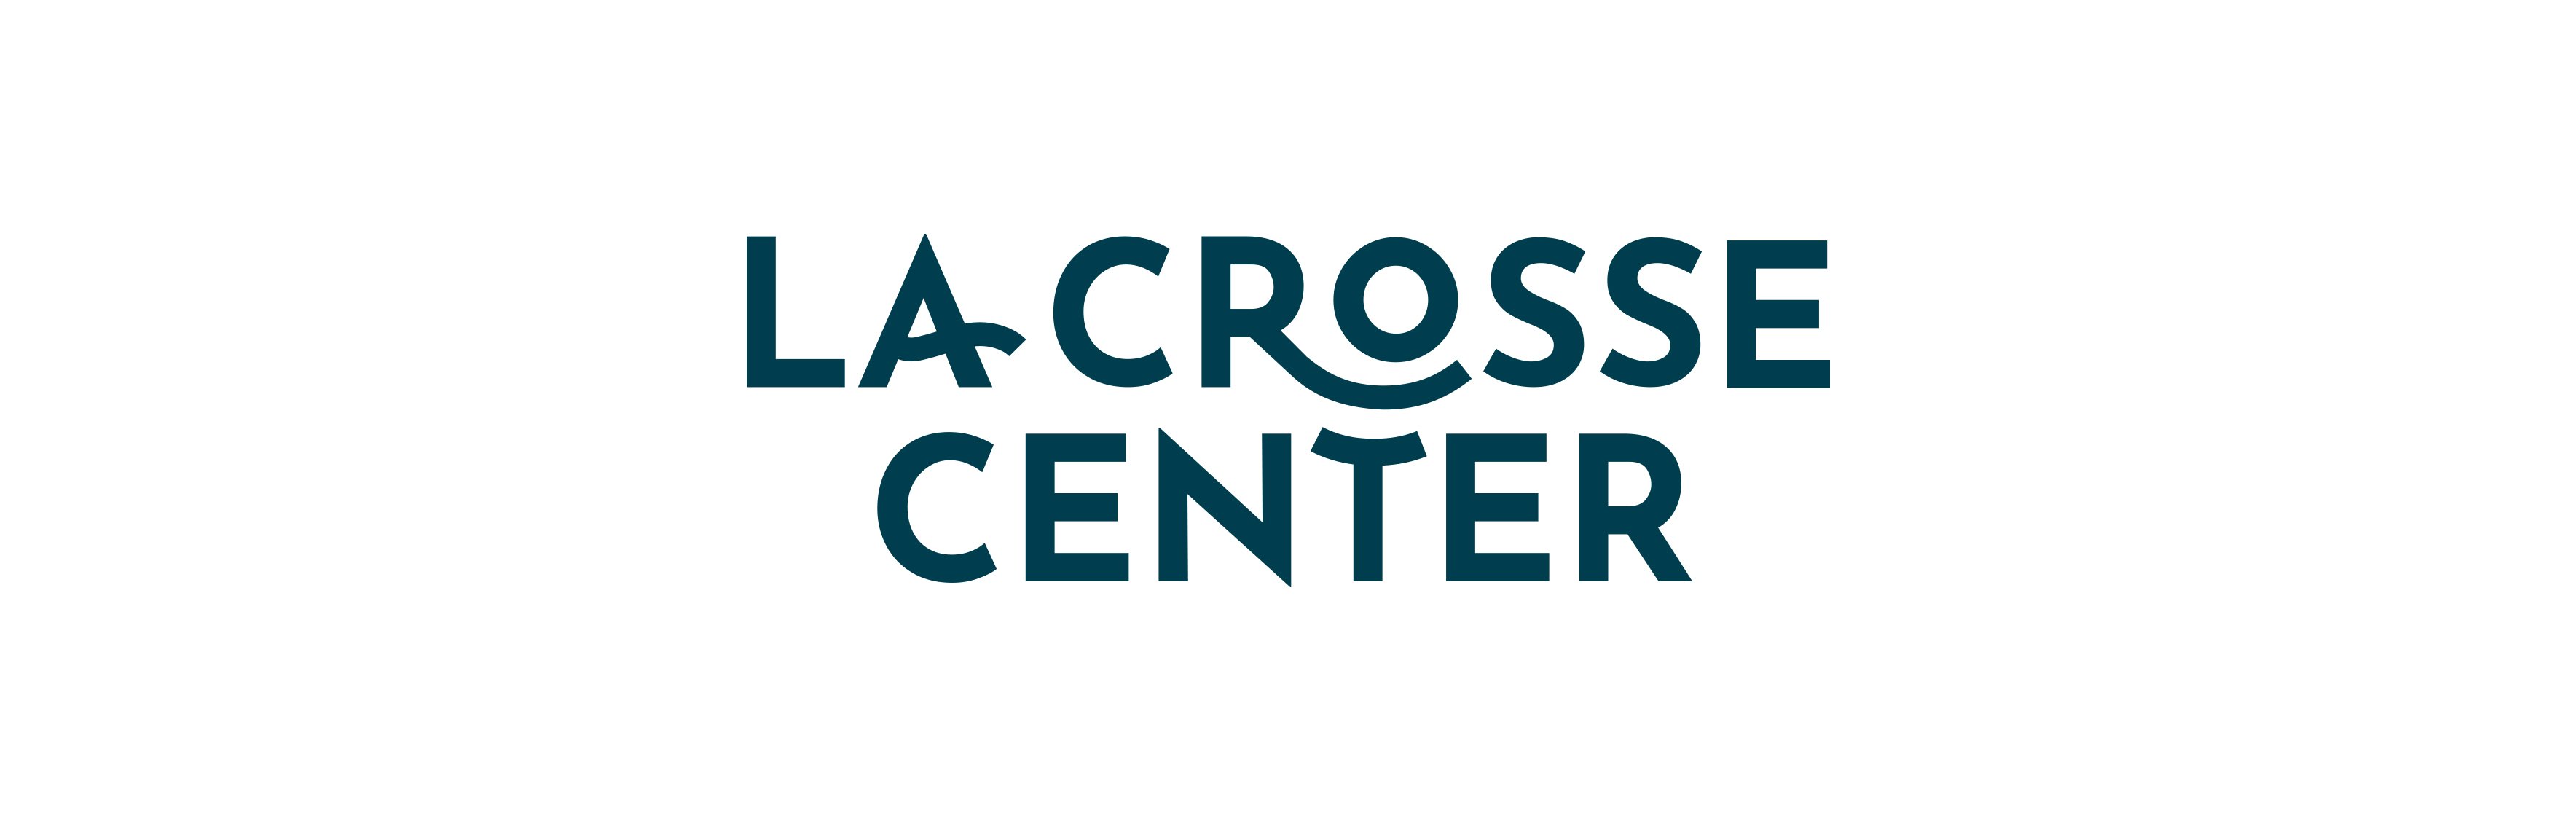 Color La Crosse Center logo created by Vendi Advertising